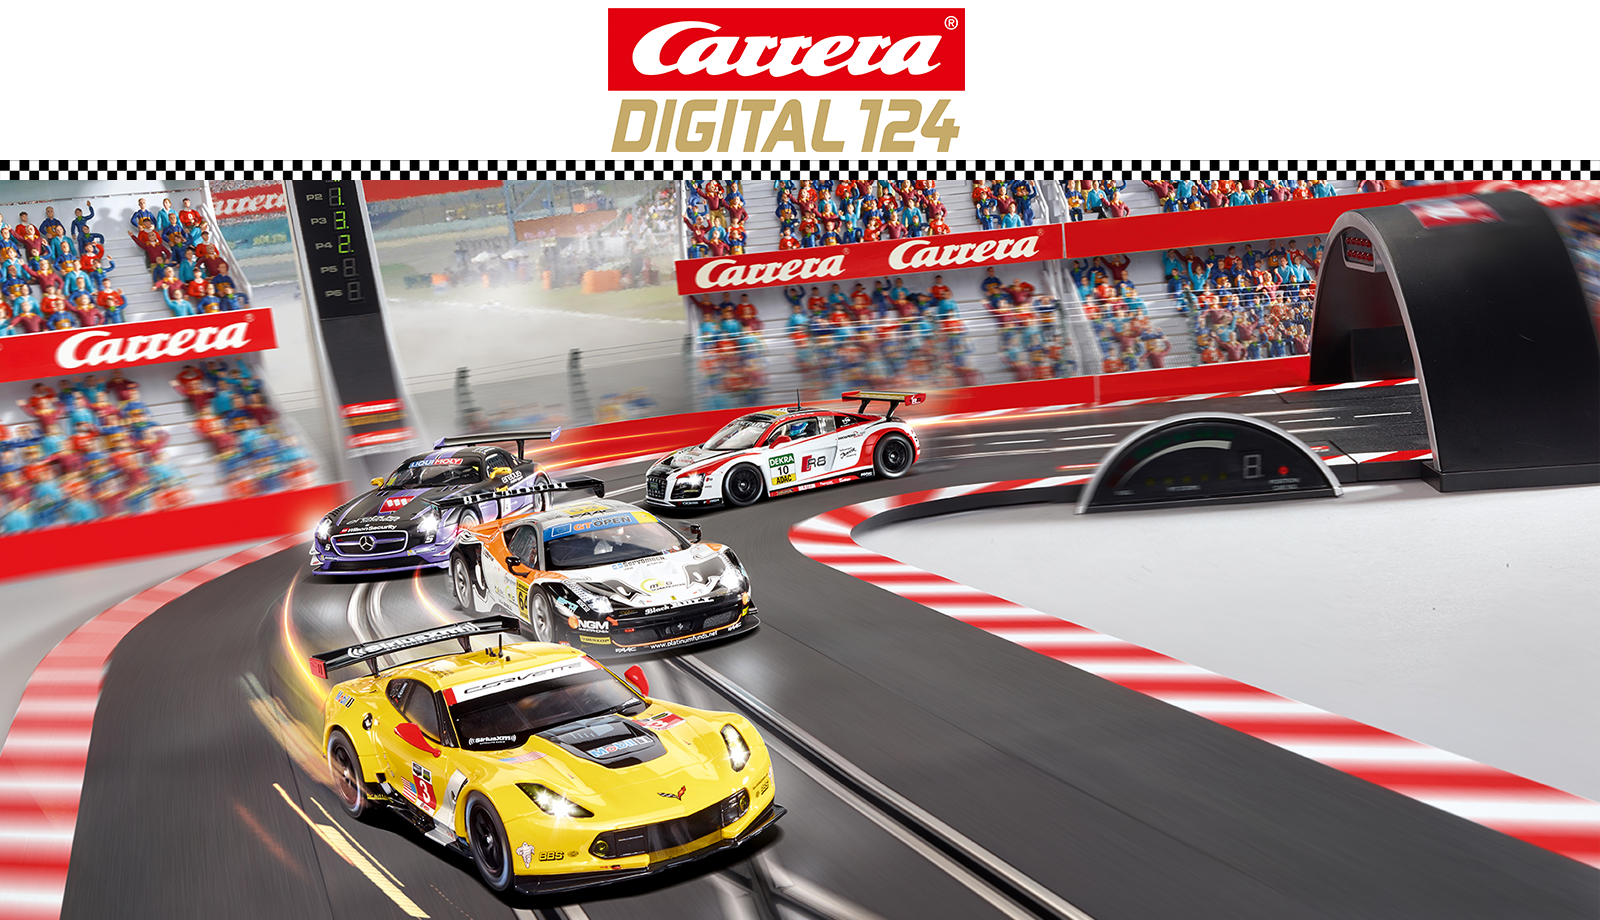 Carrera Slot Car Catalog 2014-2015 Digital 124 132 143 Evolution Go Cars Sets! 